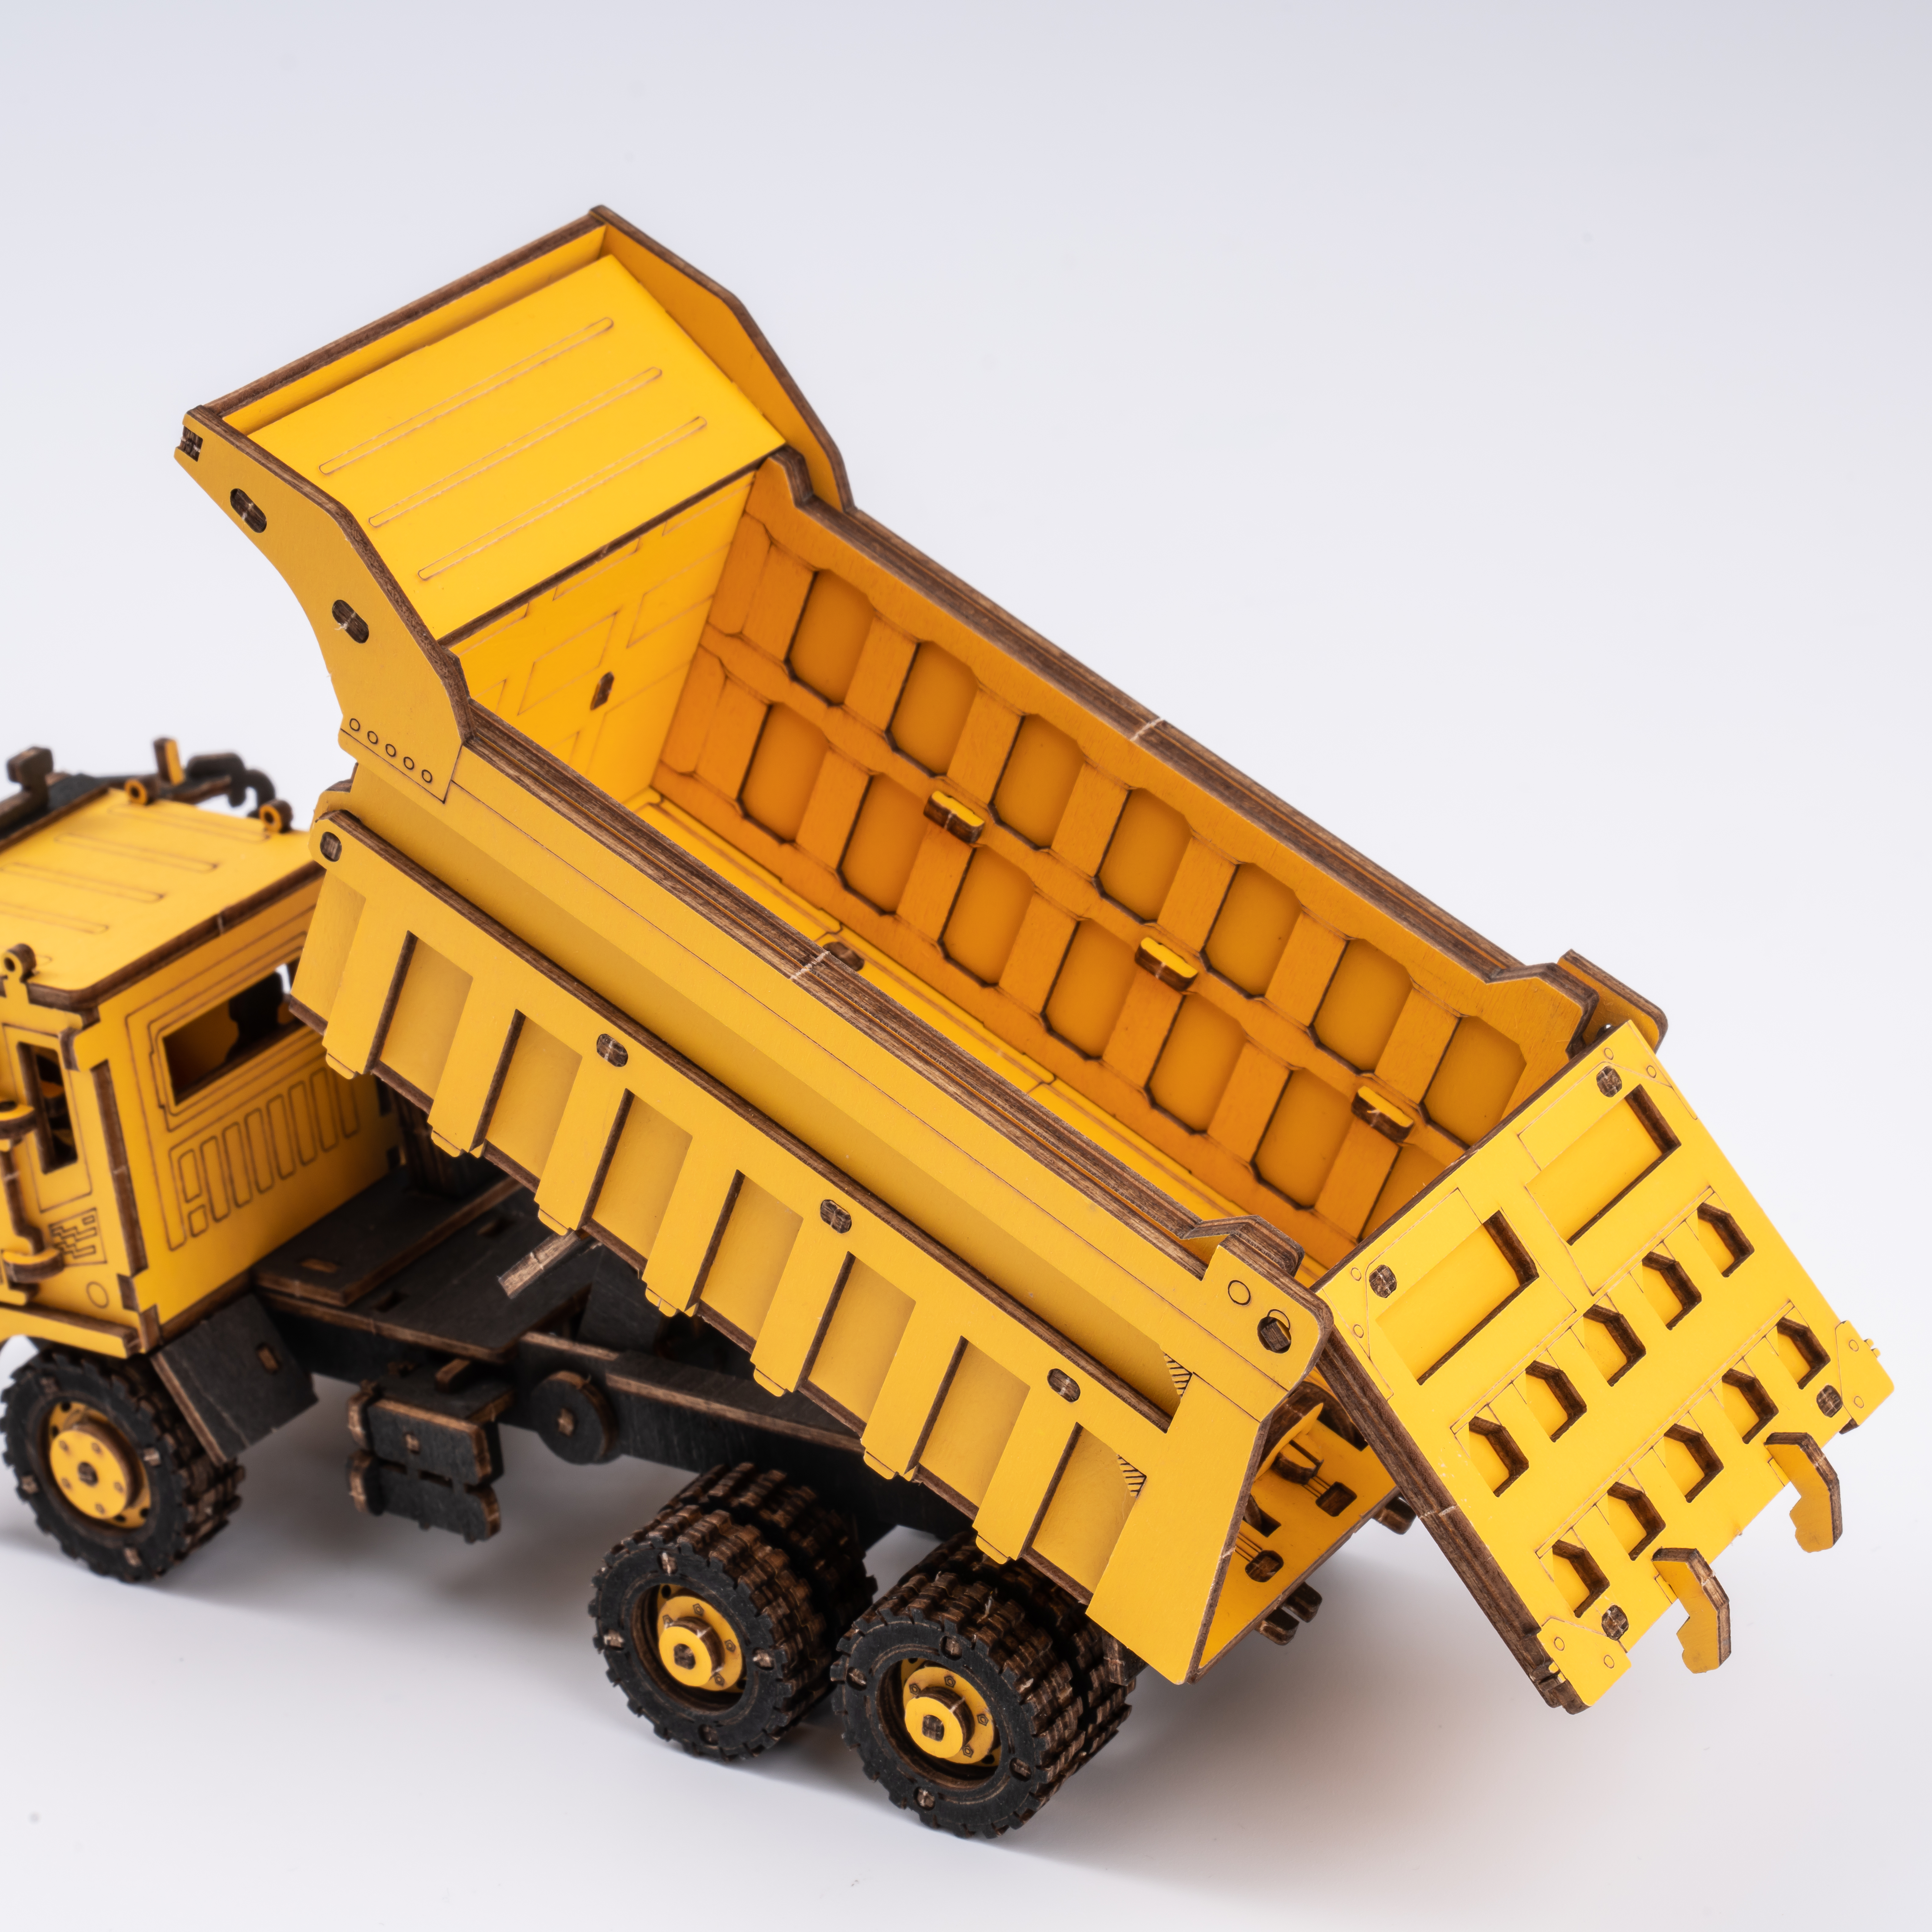 Wooden Dump Truck Engineering Vehicle 3D Wooden Puzzle TG603K 8